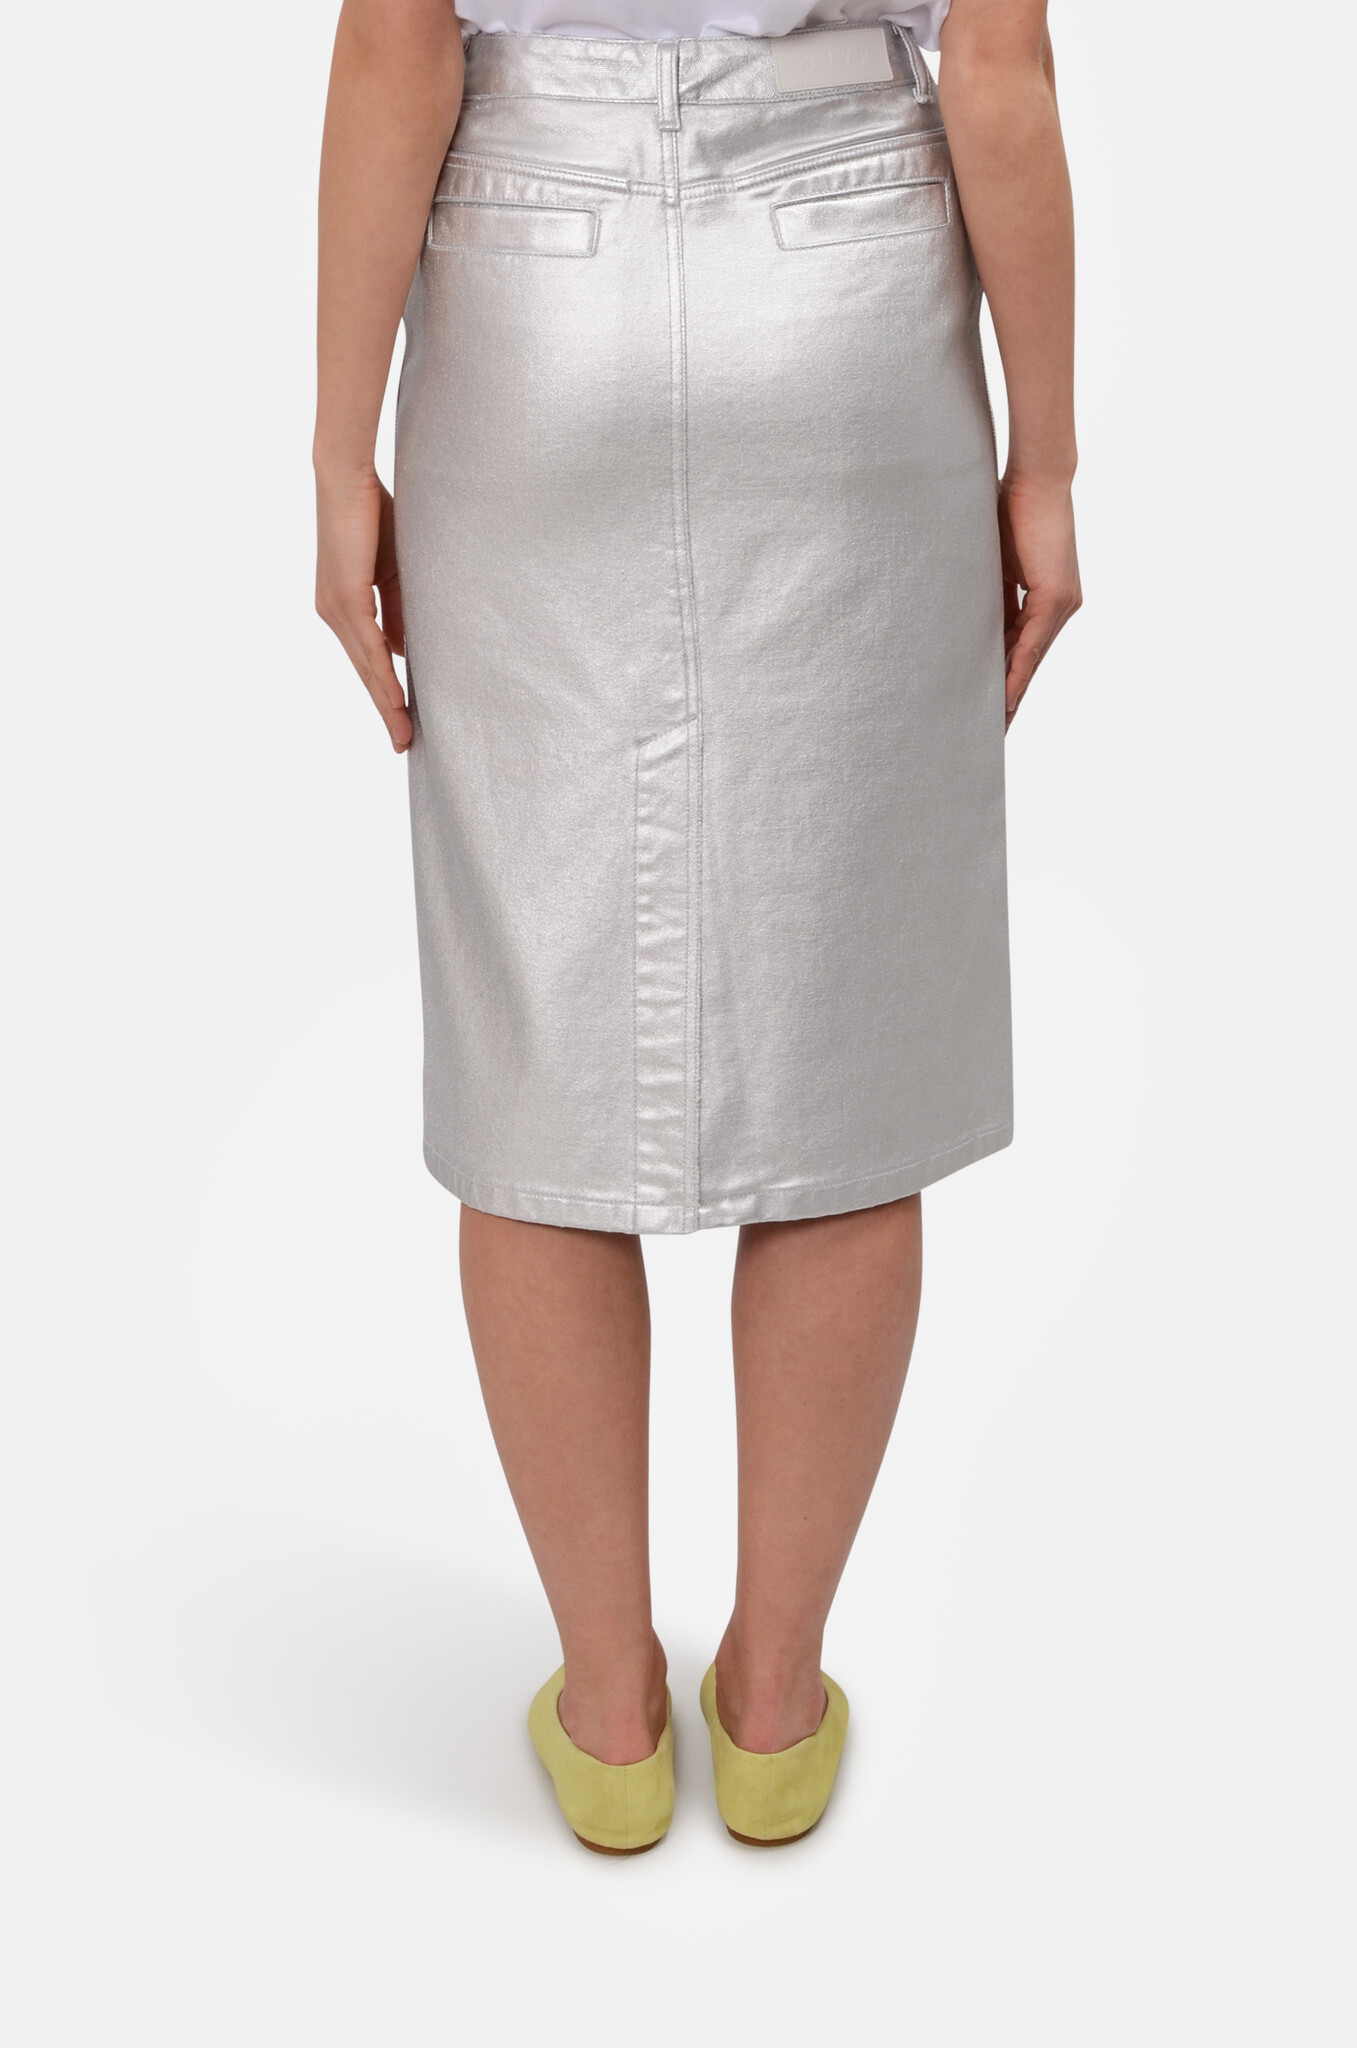 Silver Denim Skirt in Silver-4